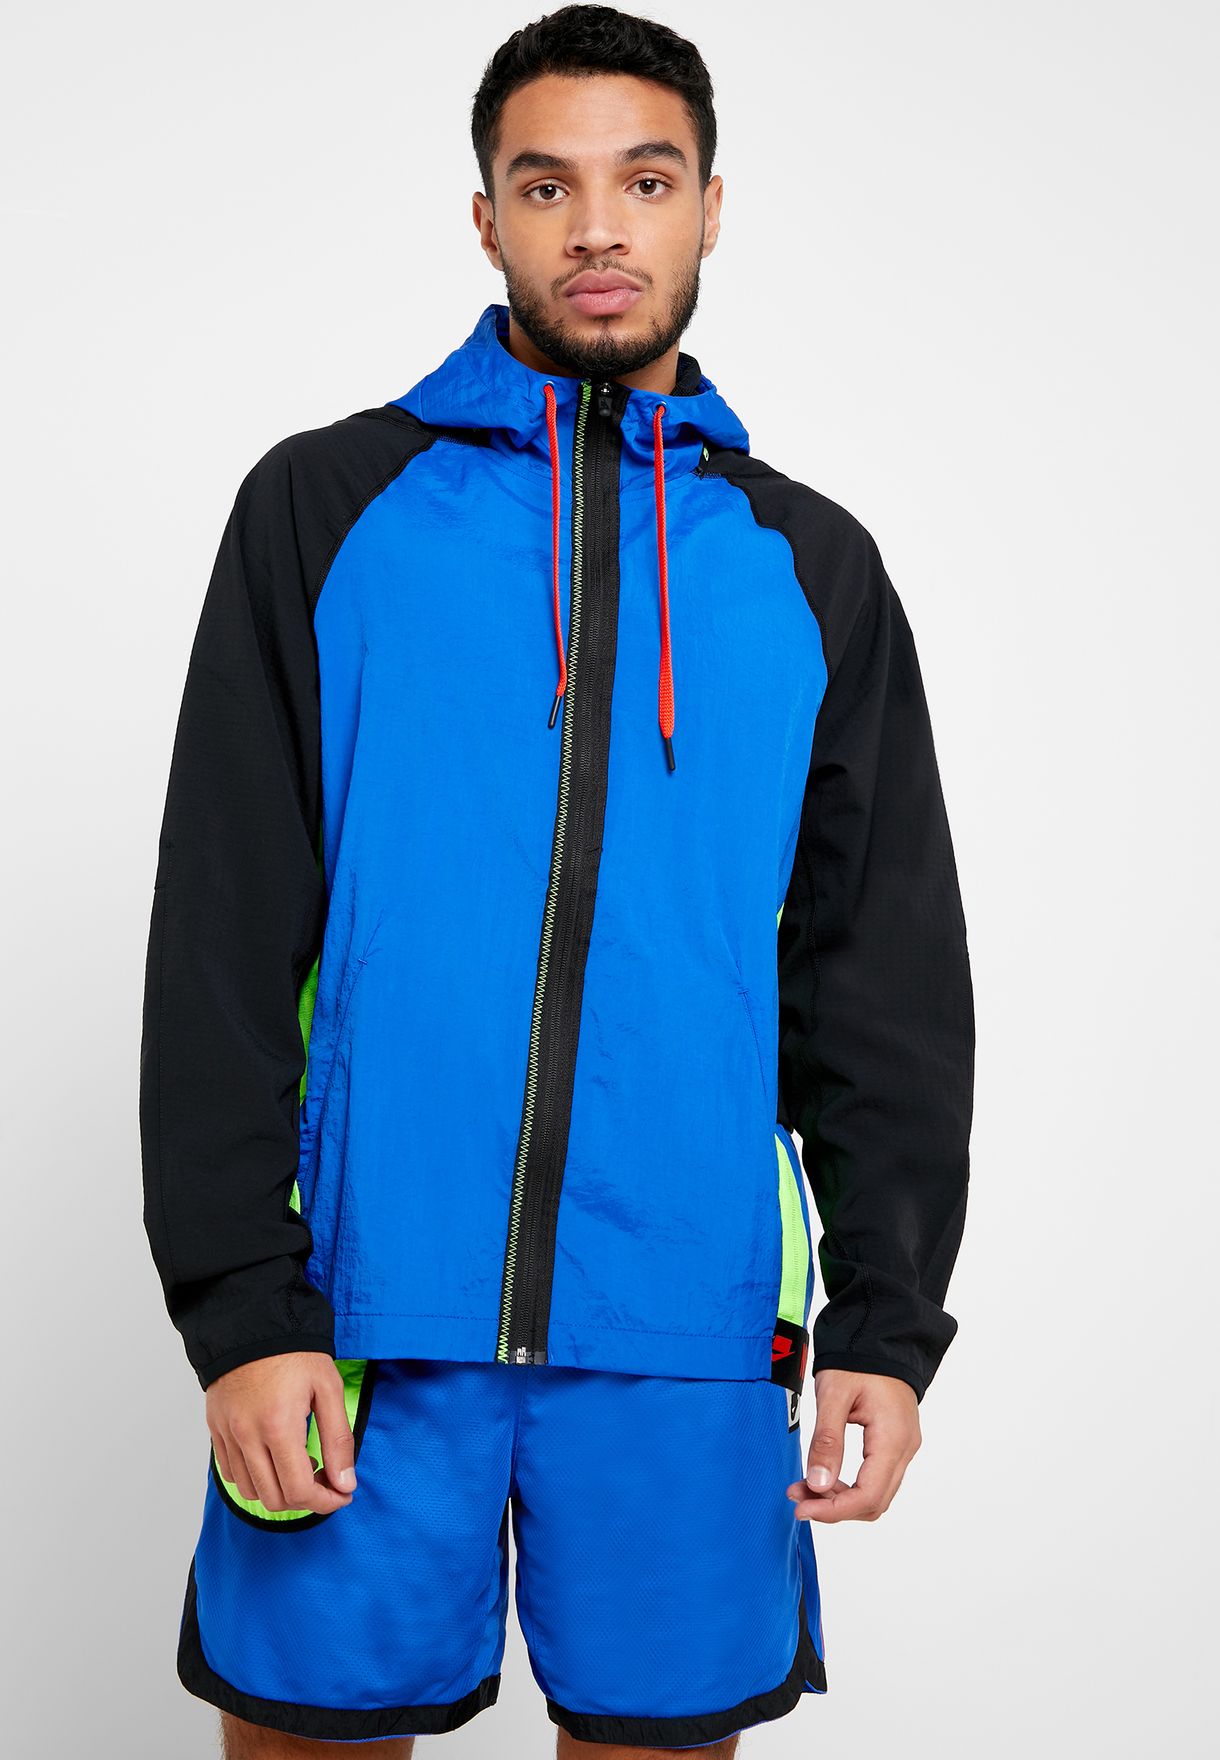 Buy Nike multicolor Flex Jacket for Men 